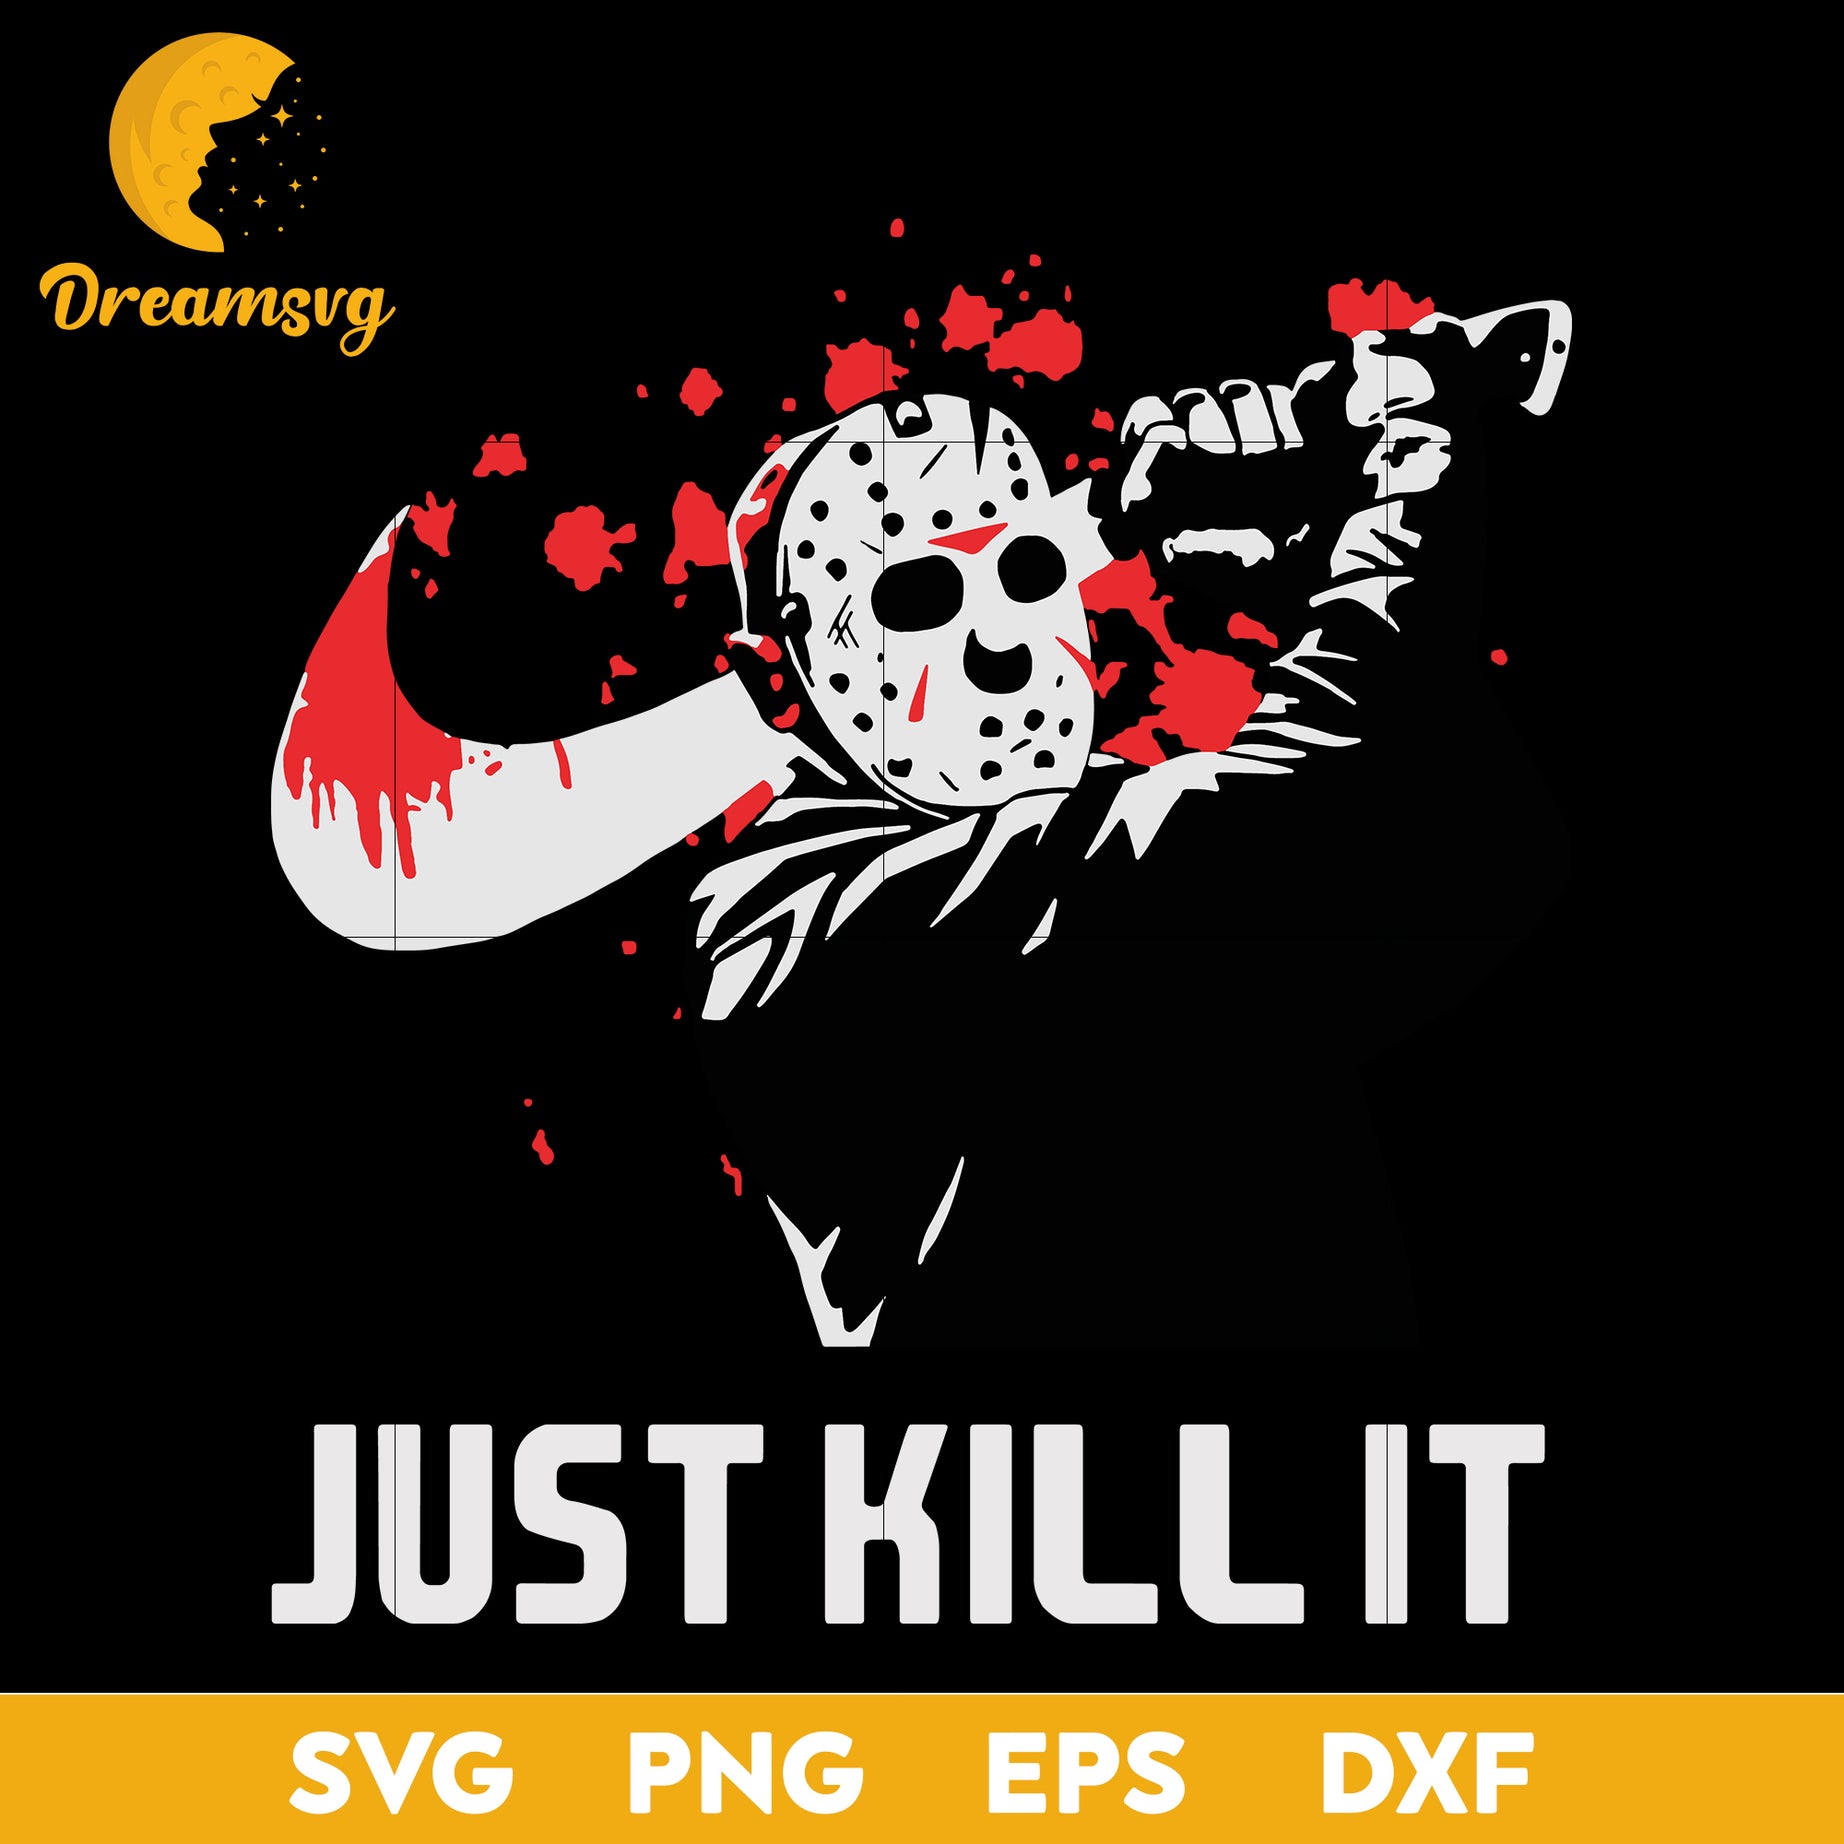 Just kill it svg, Halloween svg, png, dxf, eps digital file.